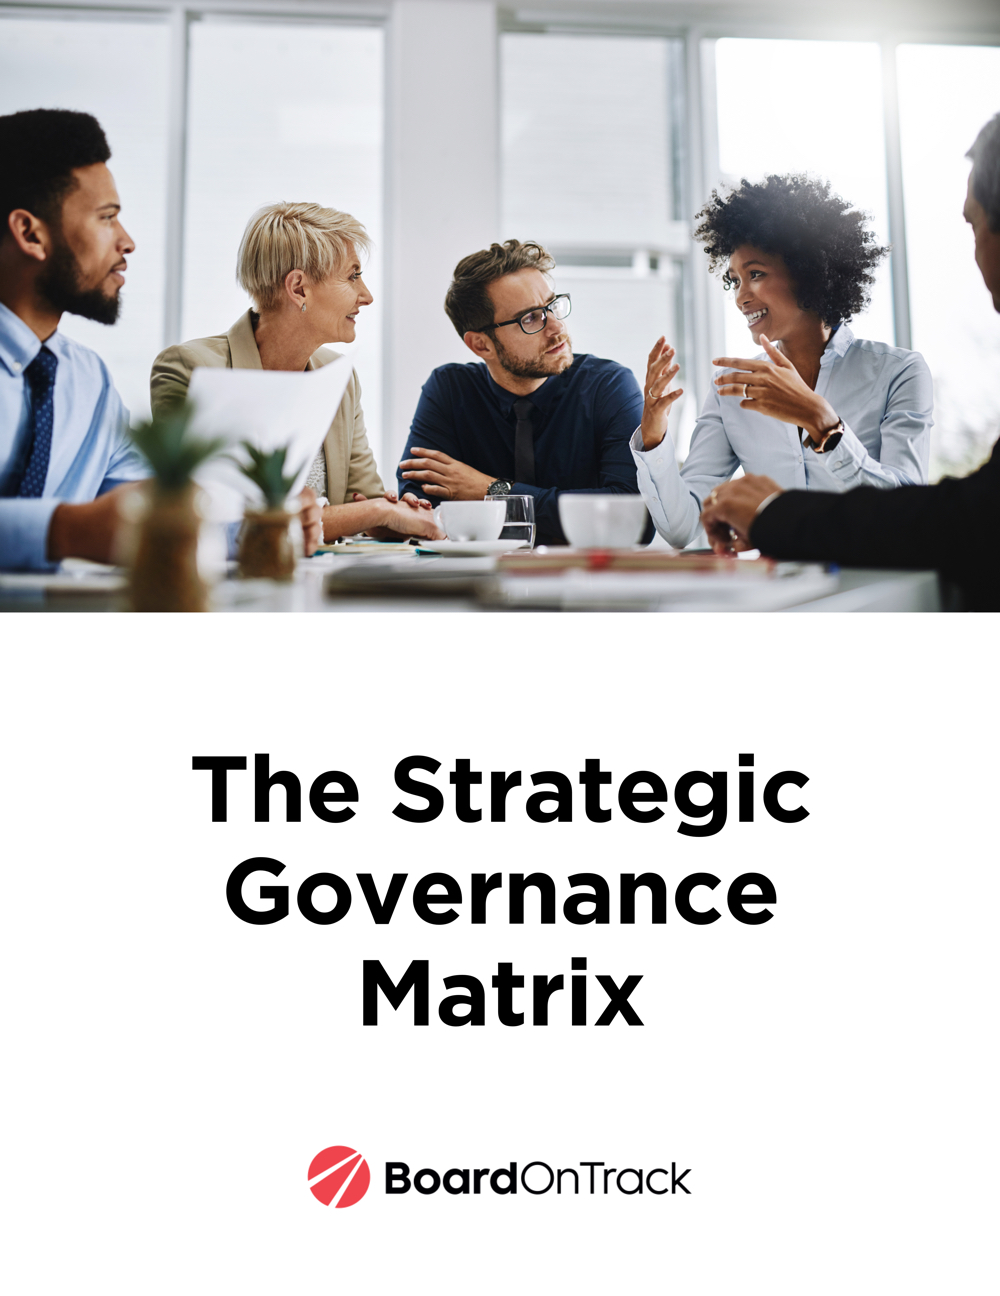 BoardOnTrack - The Strategic Governance Matrix